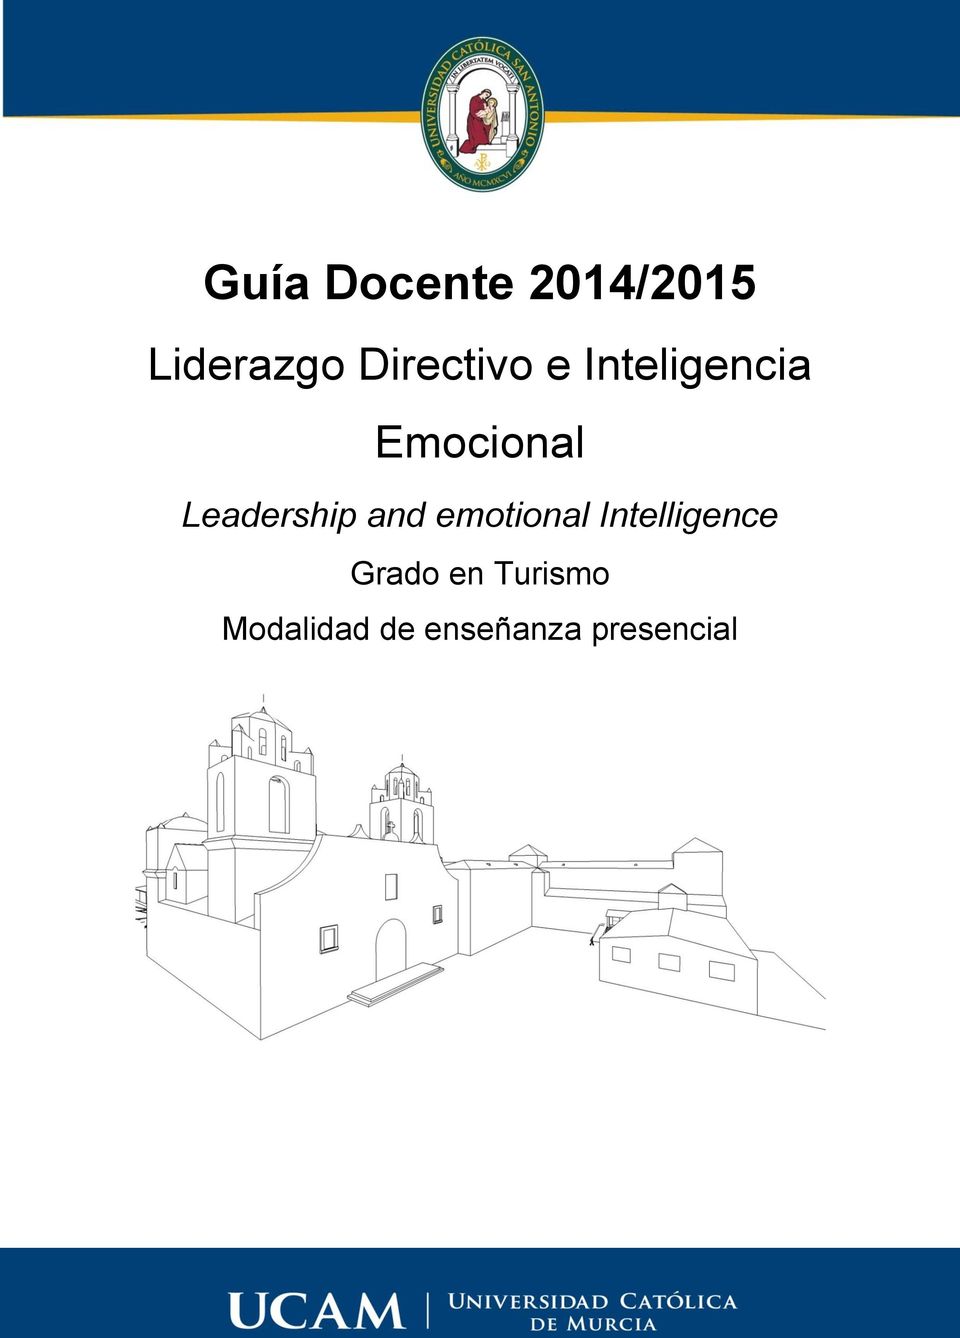 Leadership and emotional Intelligence